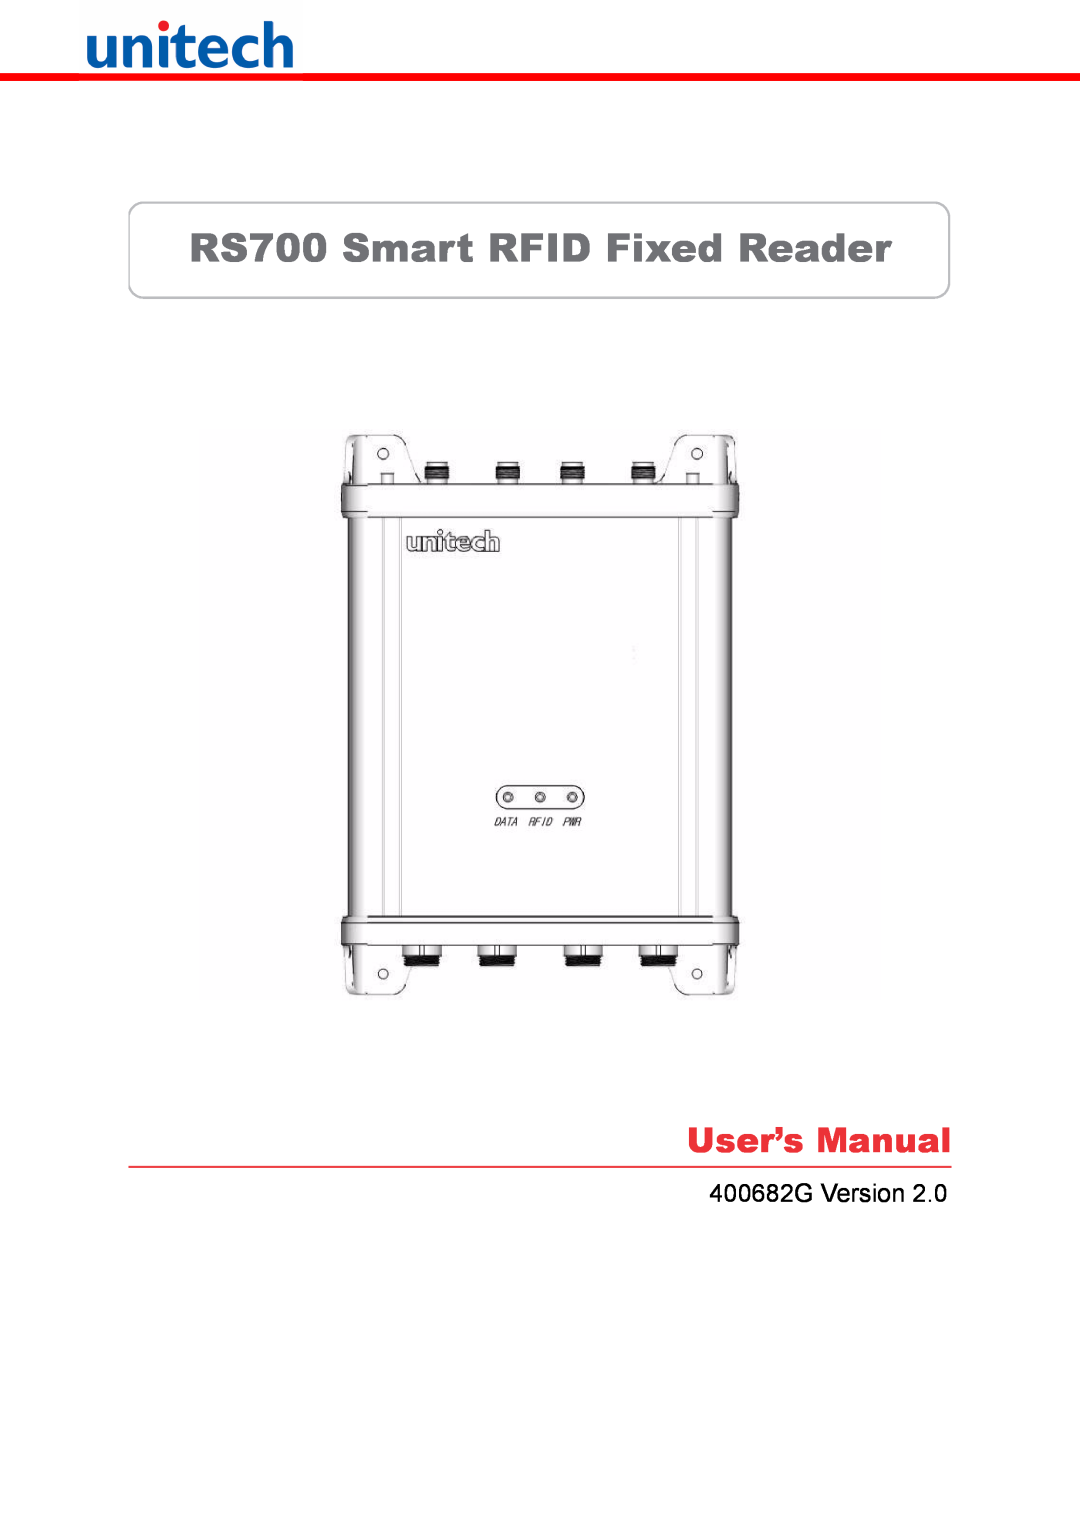 Unitech user manual RS700 Smart RFID Fixed Reader, 400682G Version, User’s Manual 